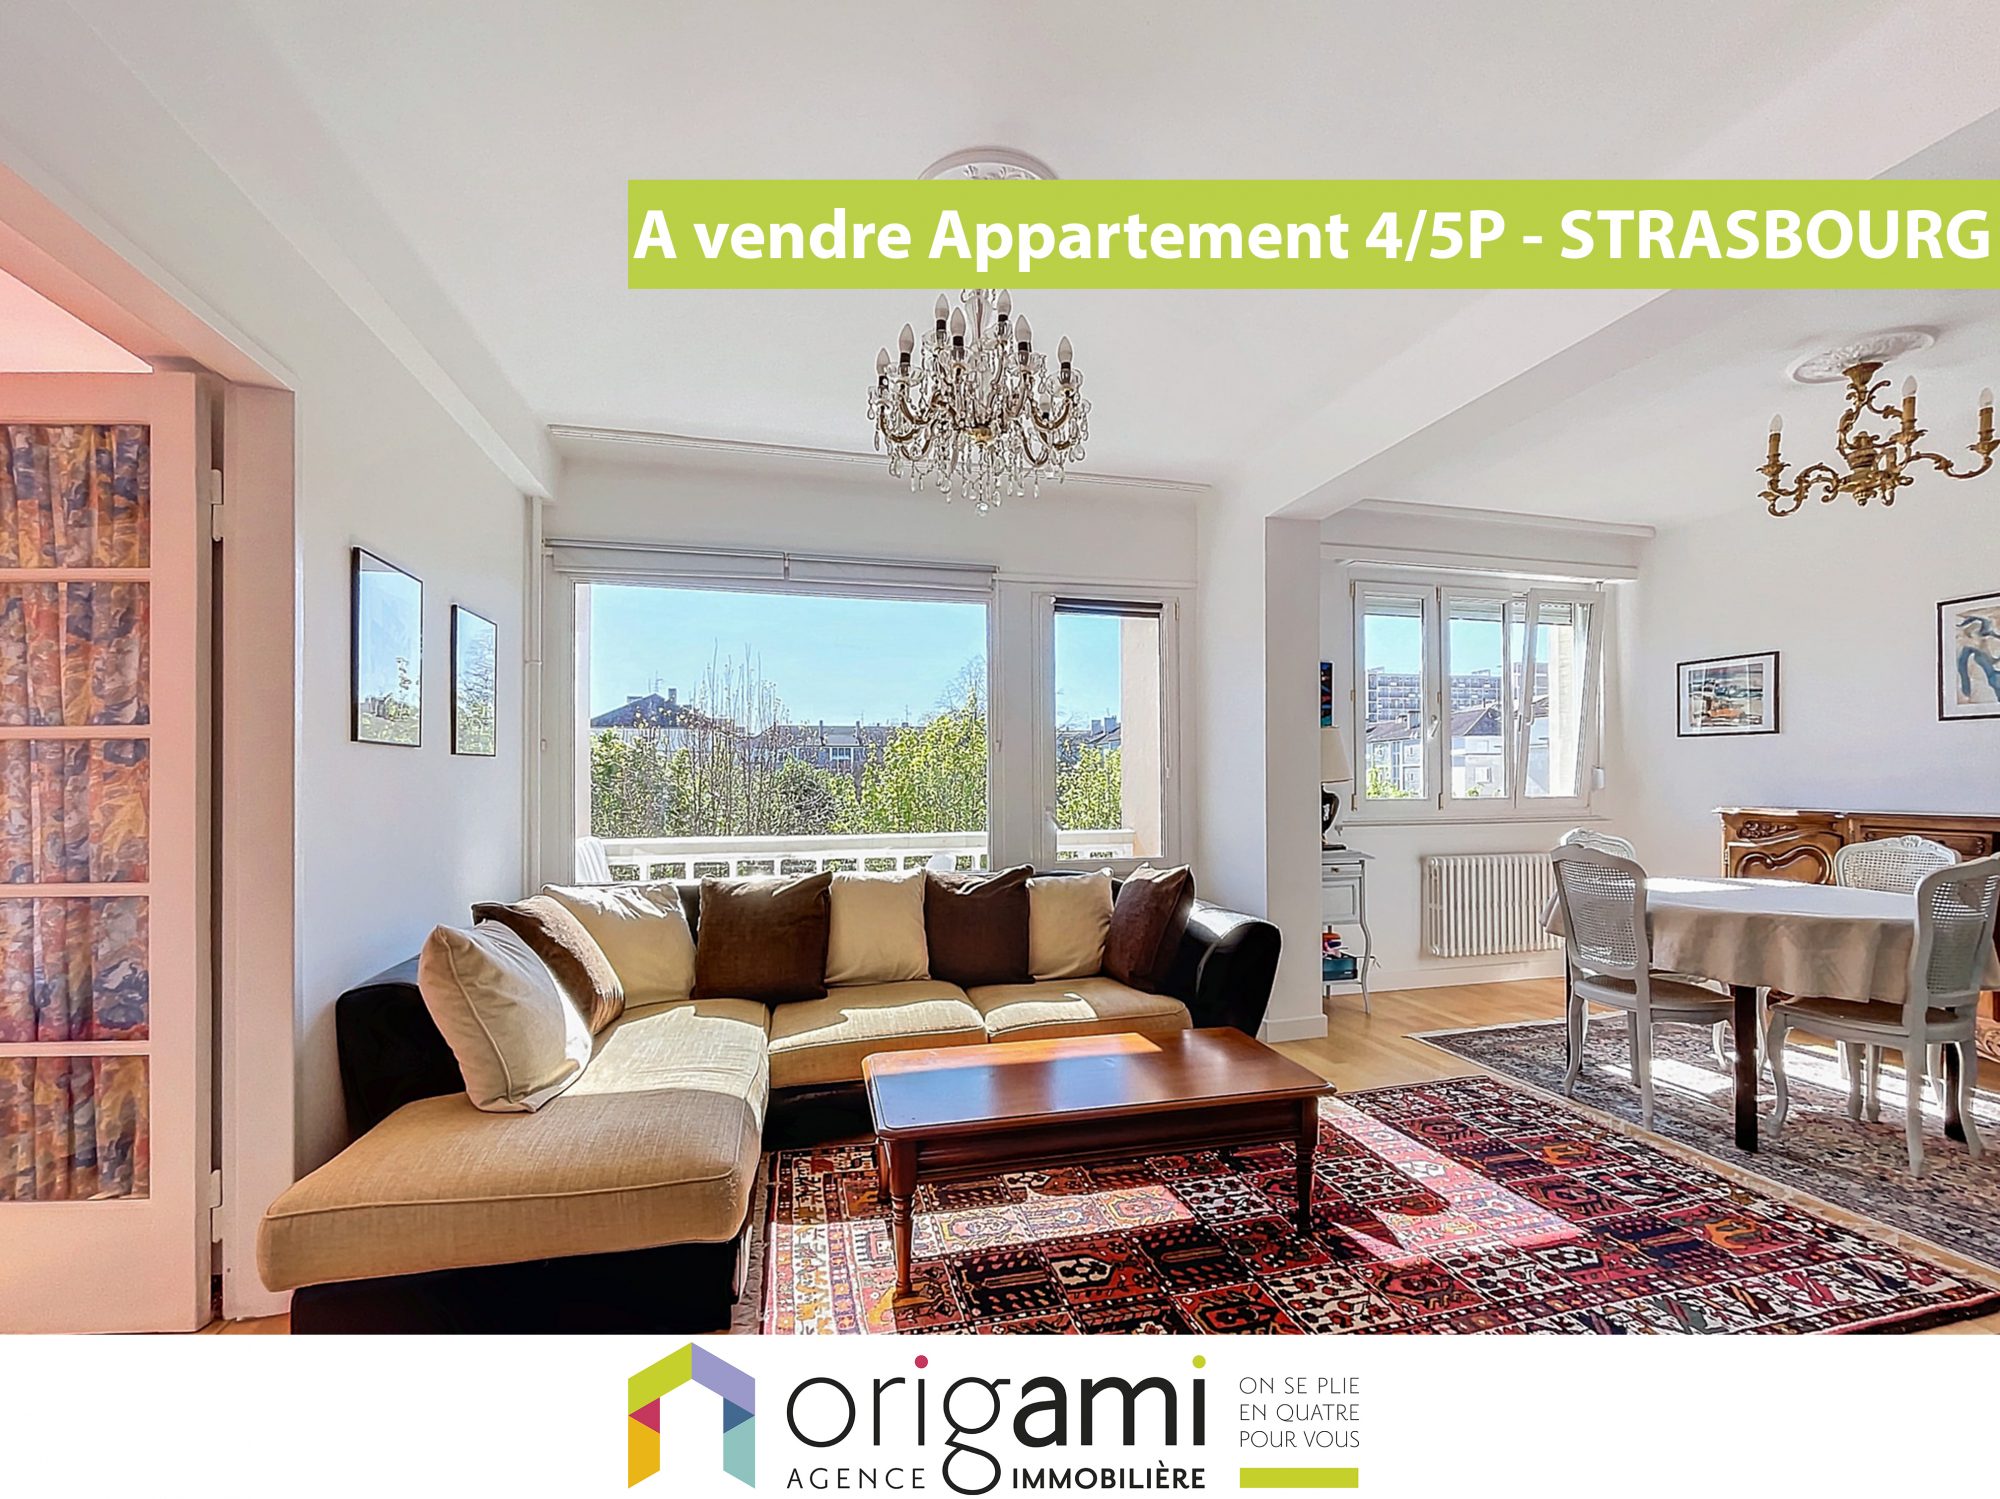 Vente Appartement 101m² 4 Pièces à Strasbourg (67000) - Origami